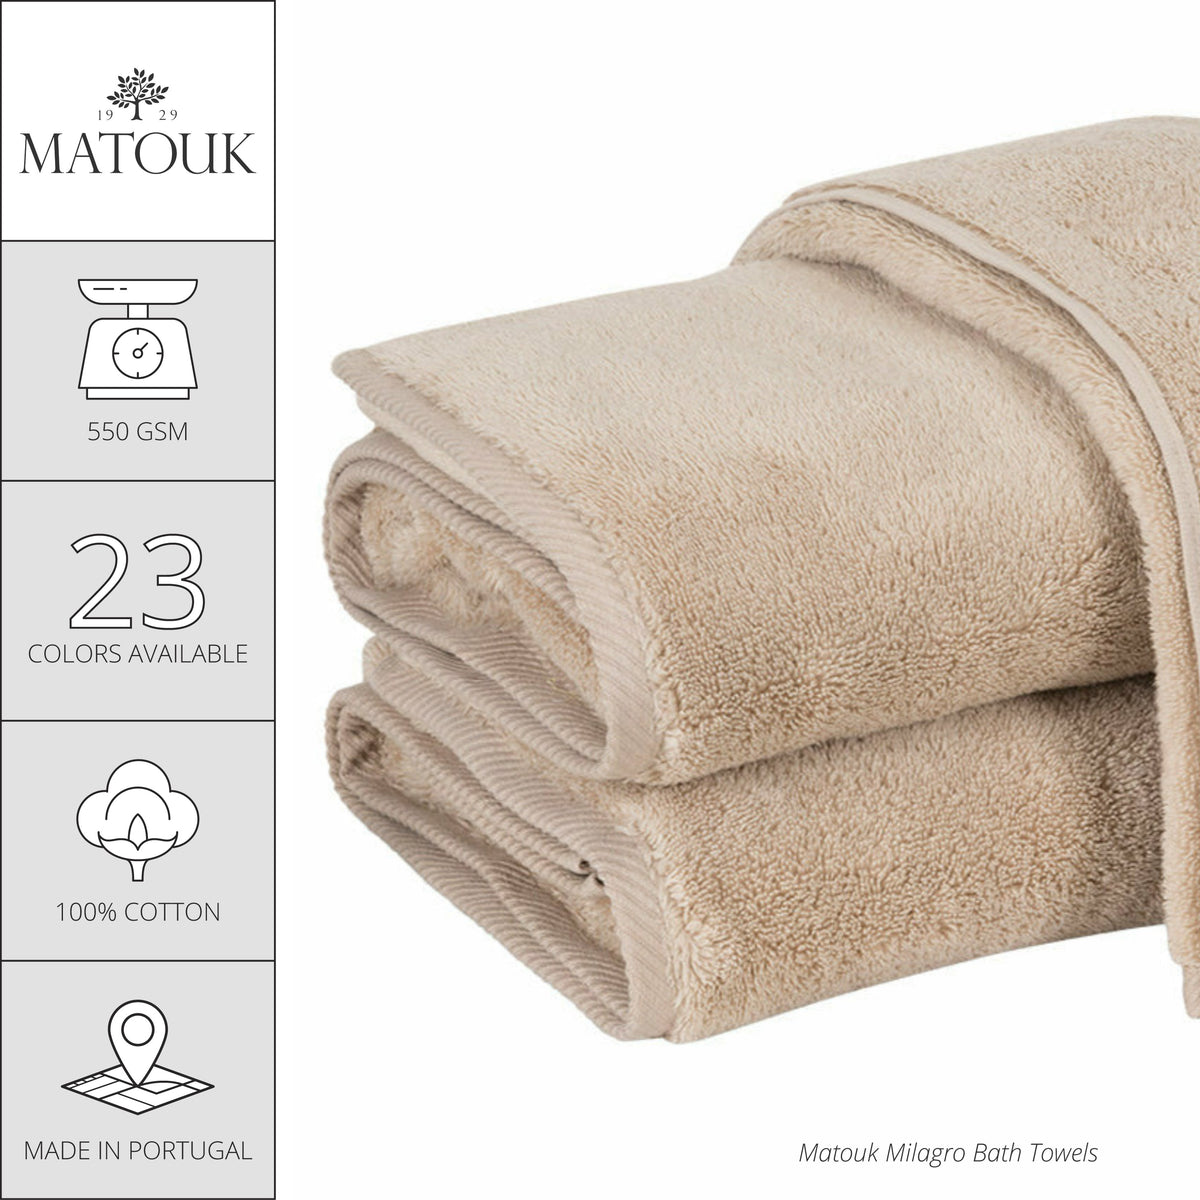 Matouk Milagro Bath Towels and Mats - Night